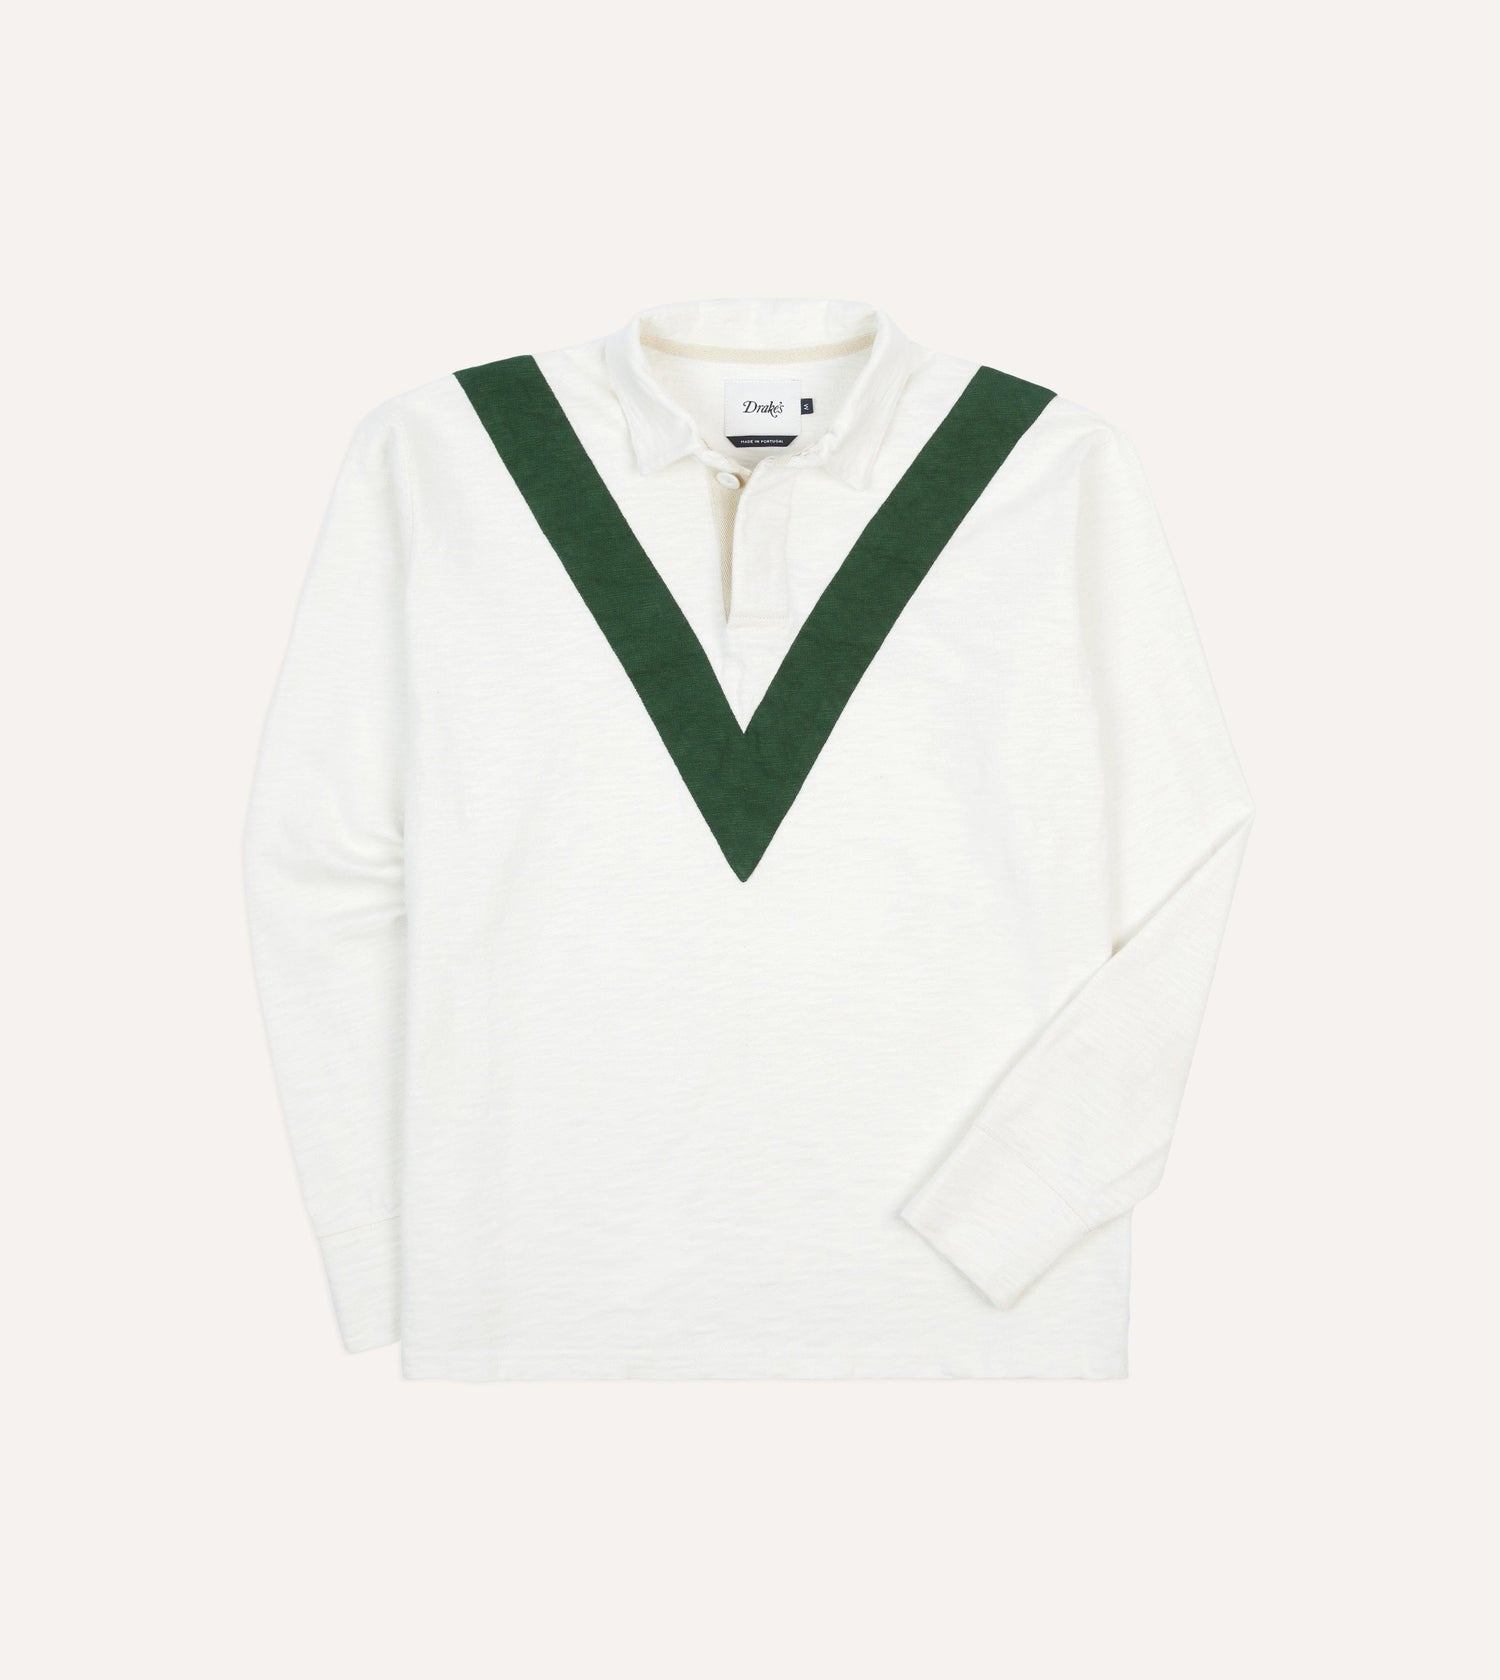 Ecru and Green Chevron Cotton Rugby Shirt